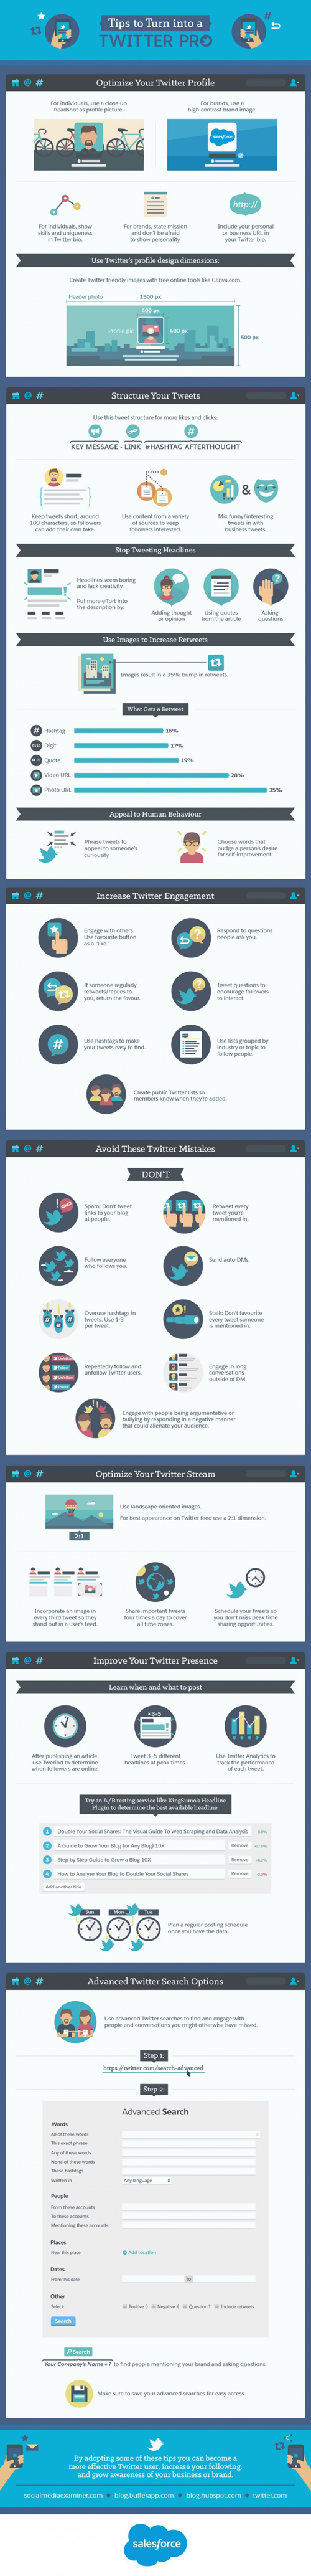 Infographie-Twitter-pubdecom-devenir-pro